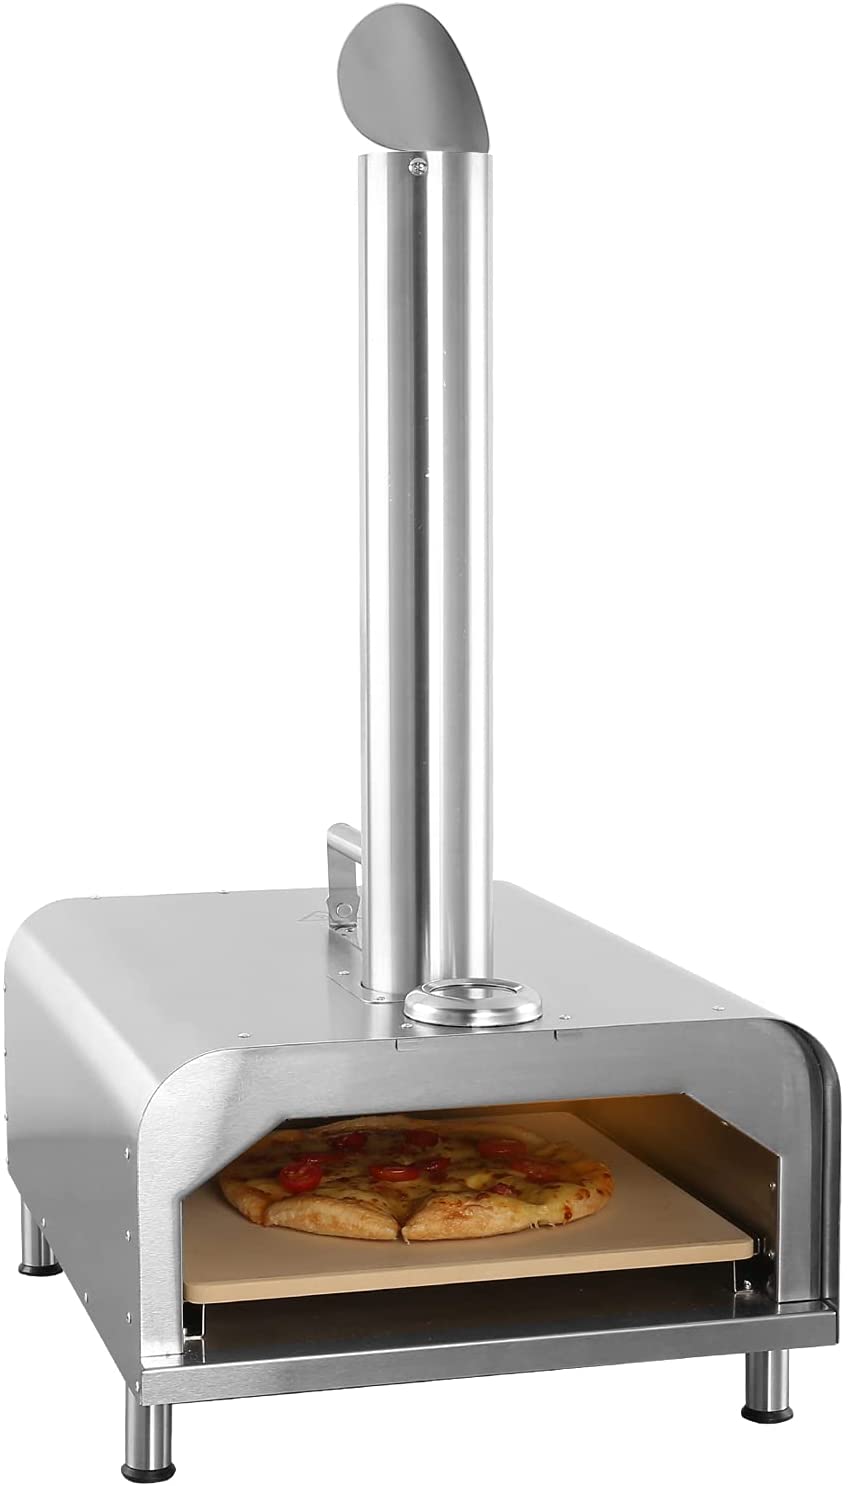  GYBER Fremont Trunk-shape Portable Pizza Oven 12” Outdoor Wood, Charcoal & Pellets Pizza Maker